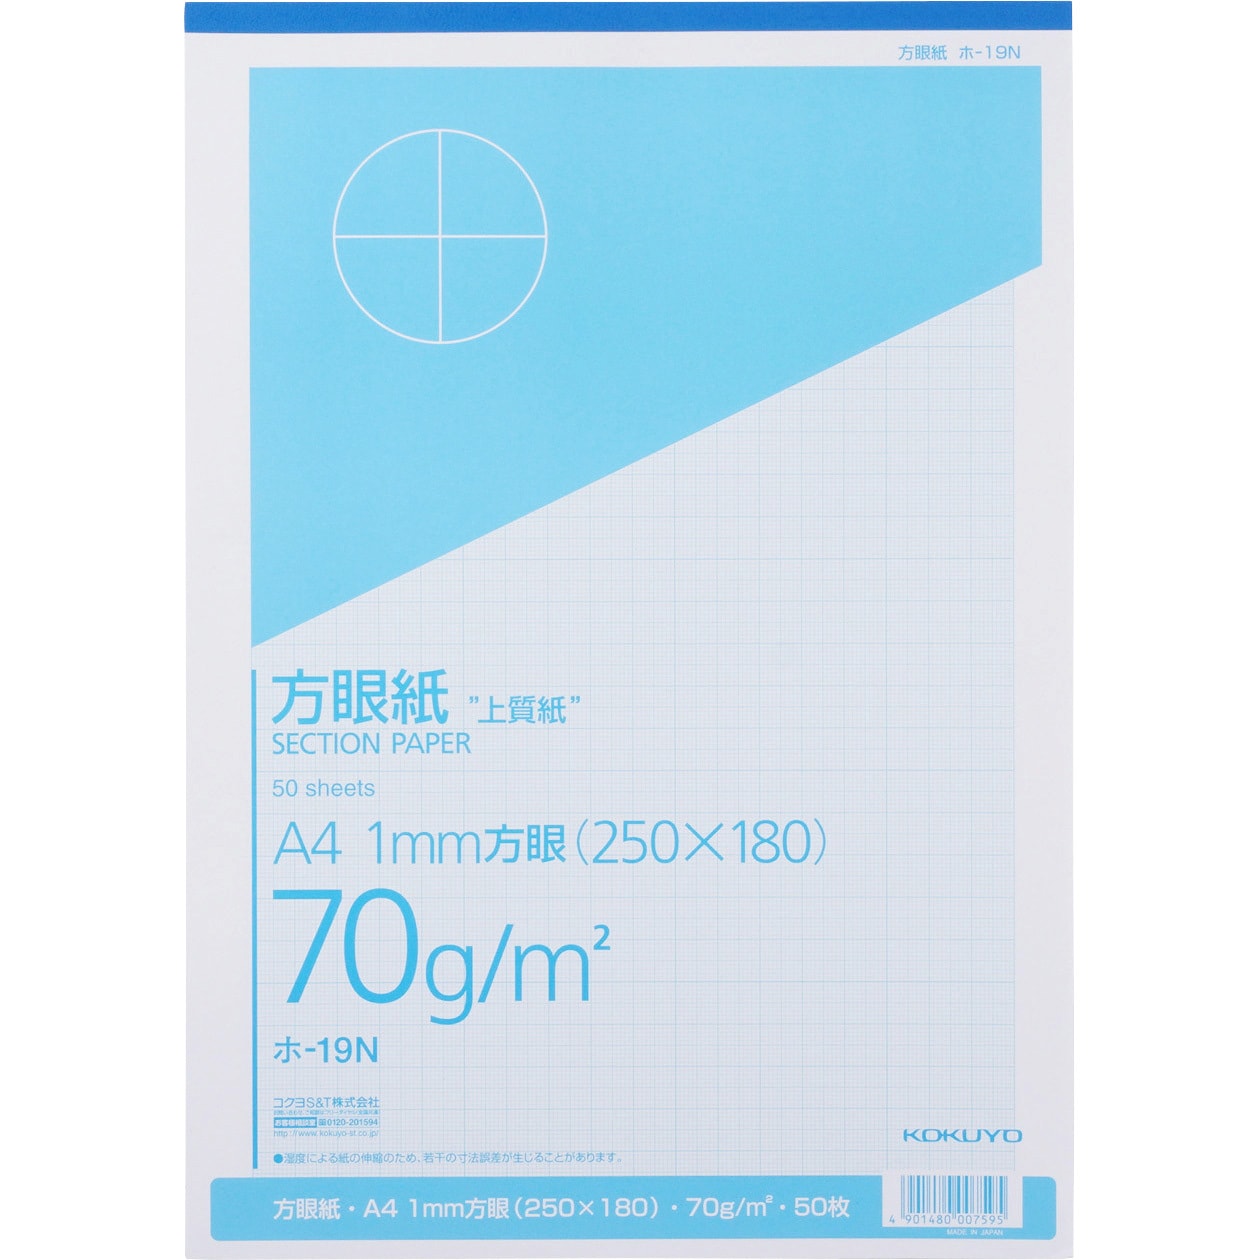 KOKUYO 上質方眼紙A4 1mm目ブルー刷り 50枚 ホ-19N - 事務用品